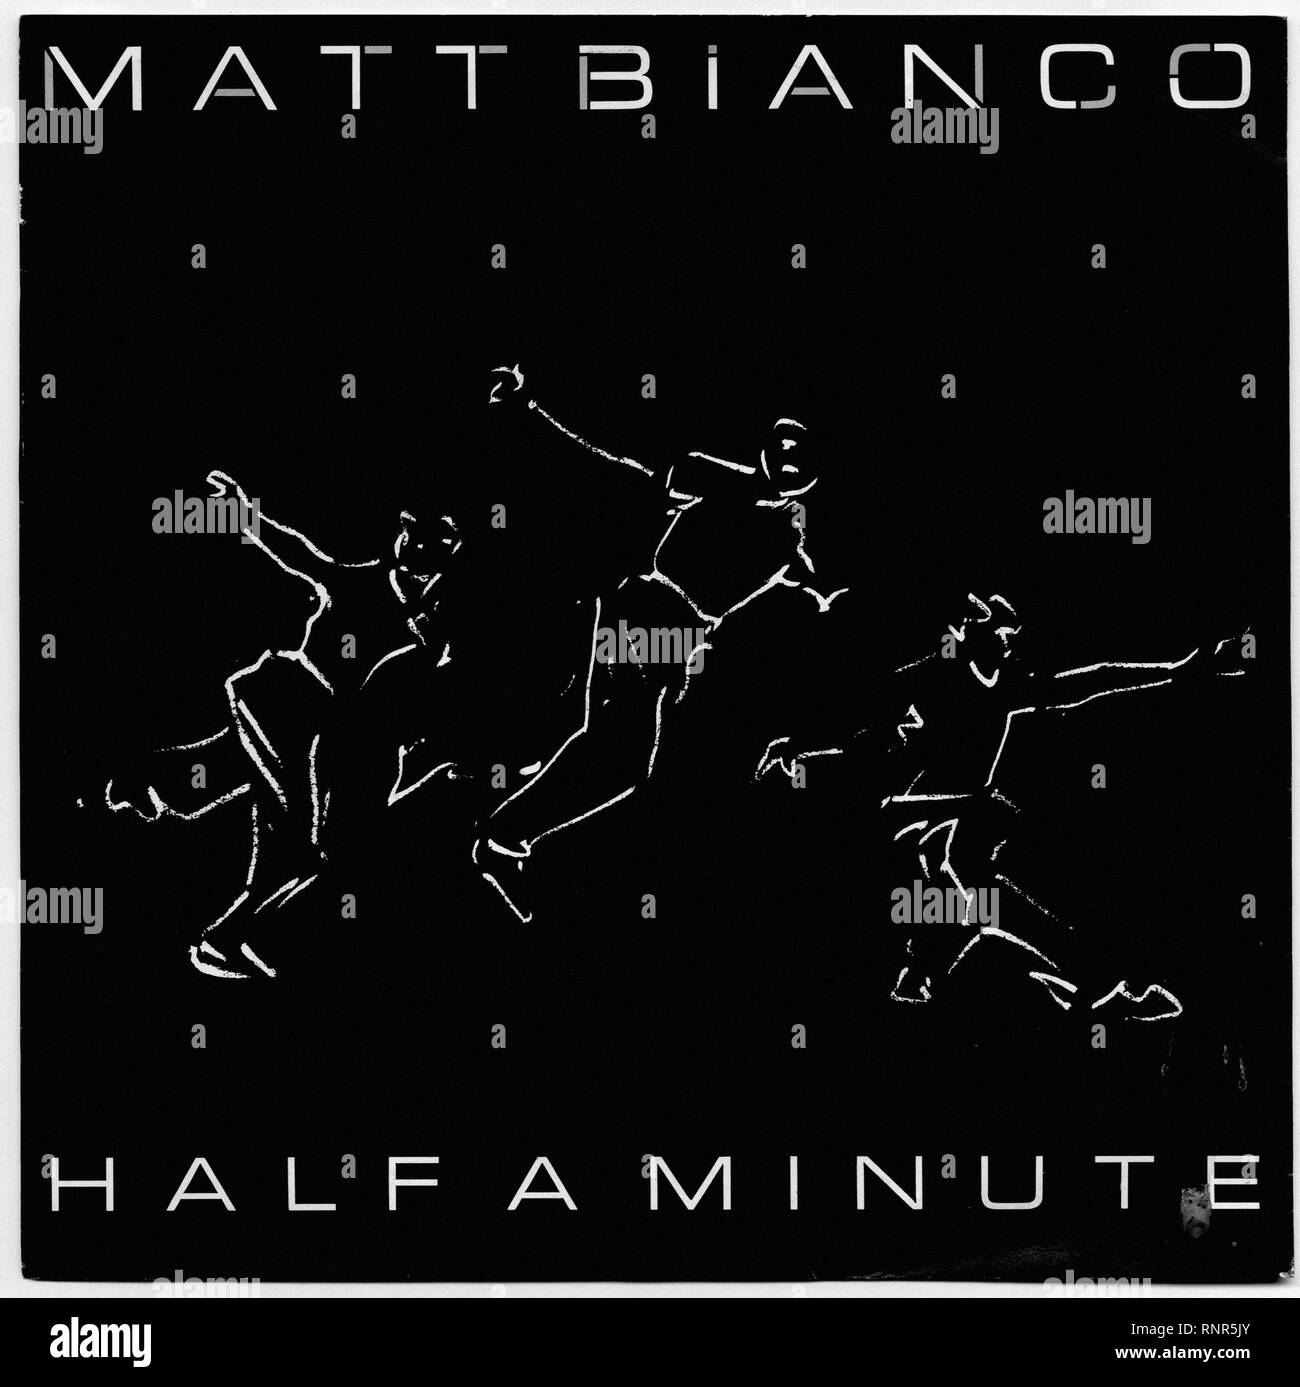 Matt Bianco - Half A Minute - Vintage Cover Album Stock Photo - Alamy